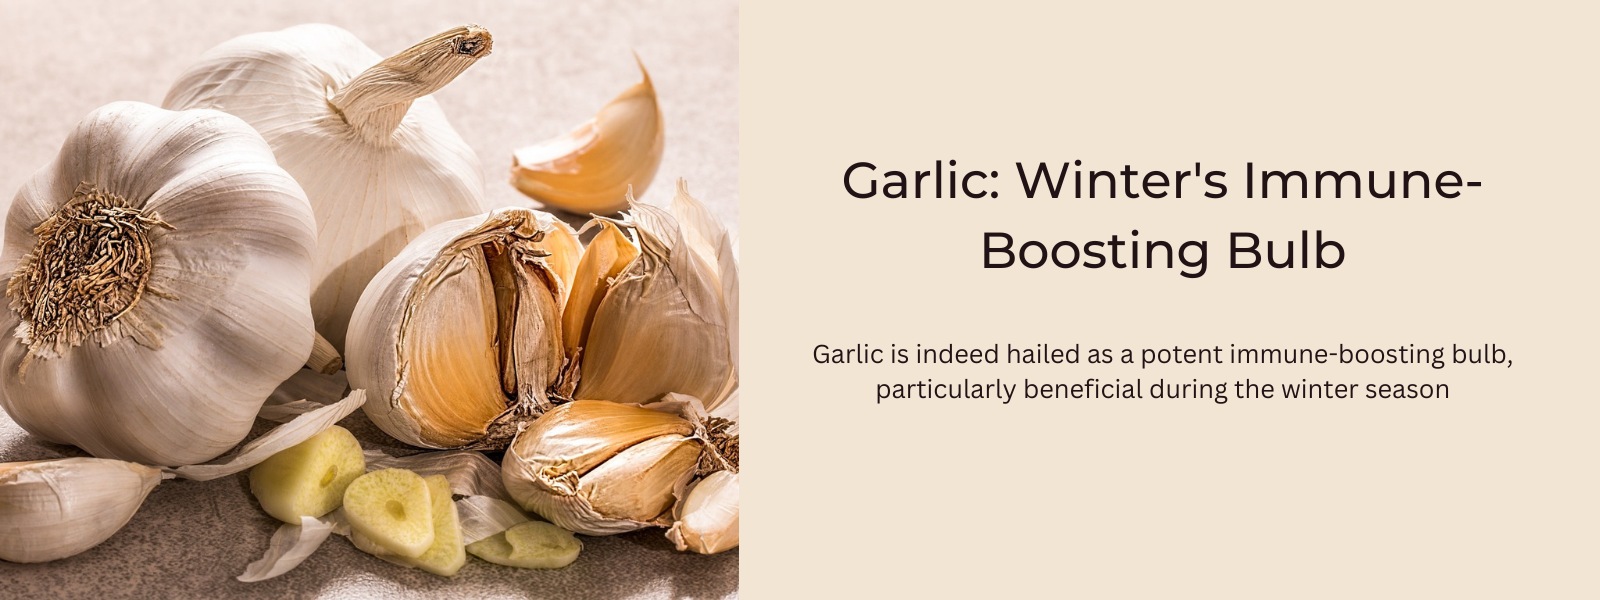 Garlic: Winter's Immune-Boosting Bulb